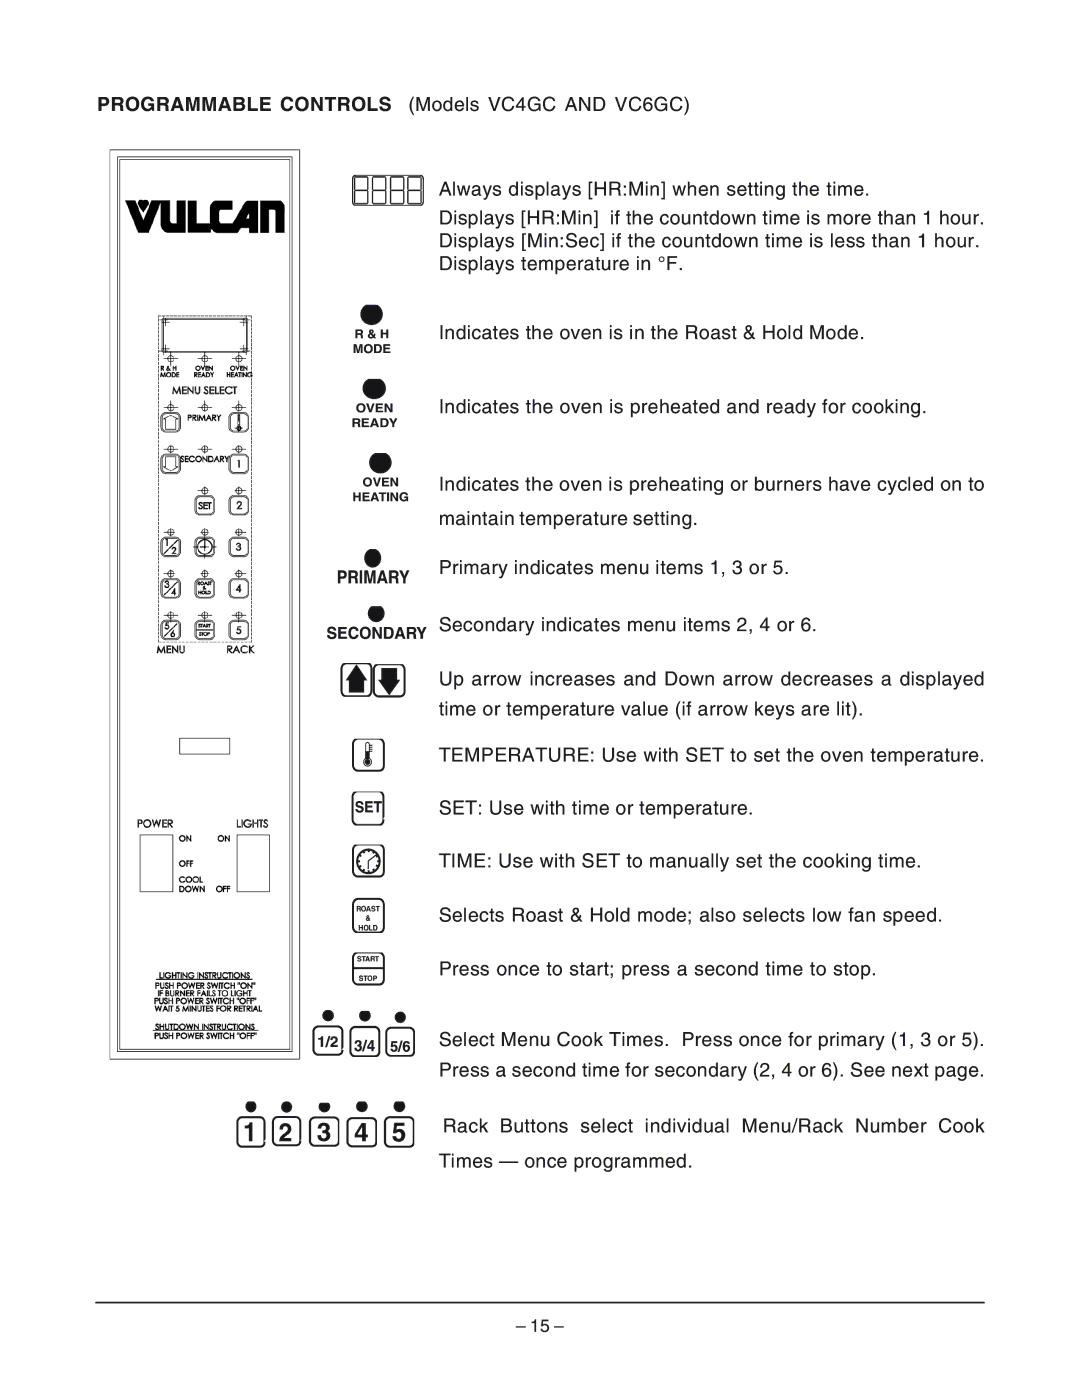 Vulcan-Hart VC4GC ML-136494, VC6GC ML-136495, VC4GD Programmable Controls Models VC4GC and VC6GC, Times once programmed 